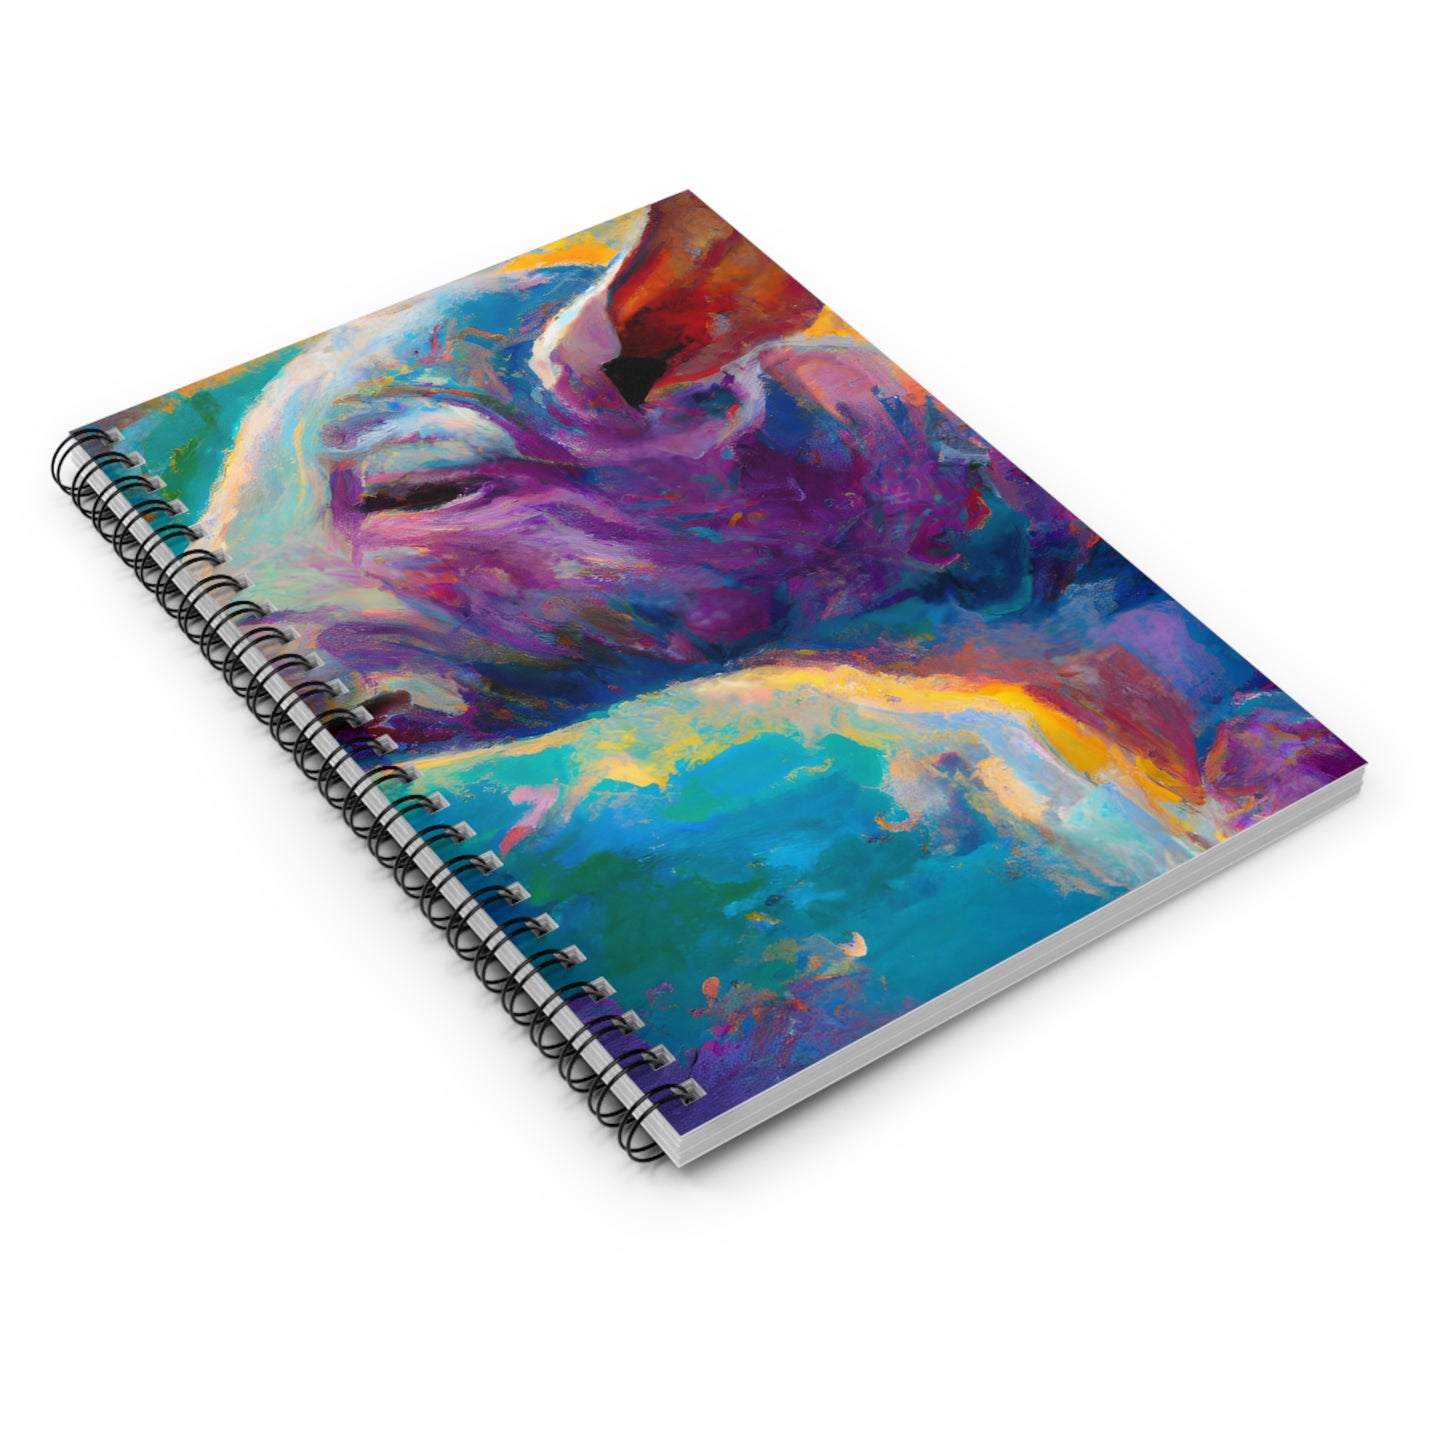 MasterPawlsky Notebook Journal